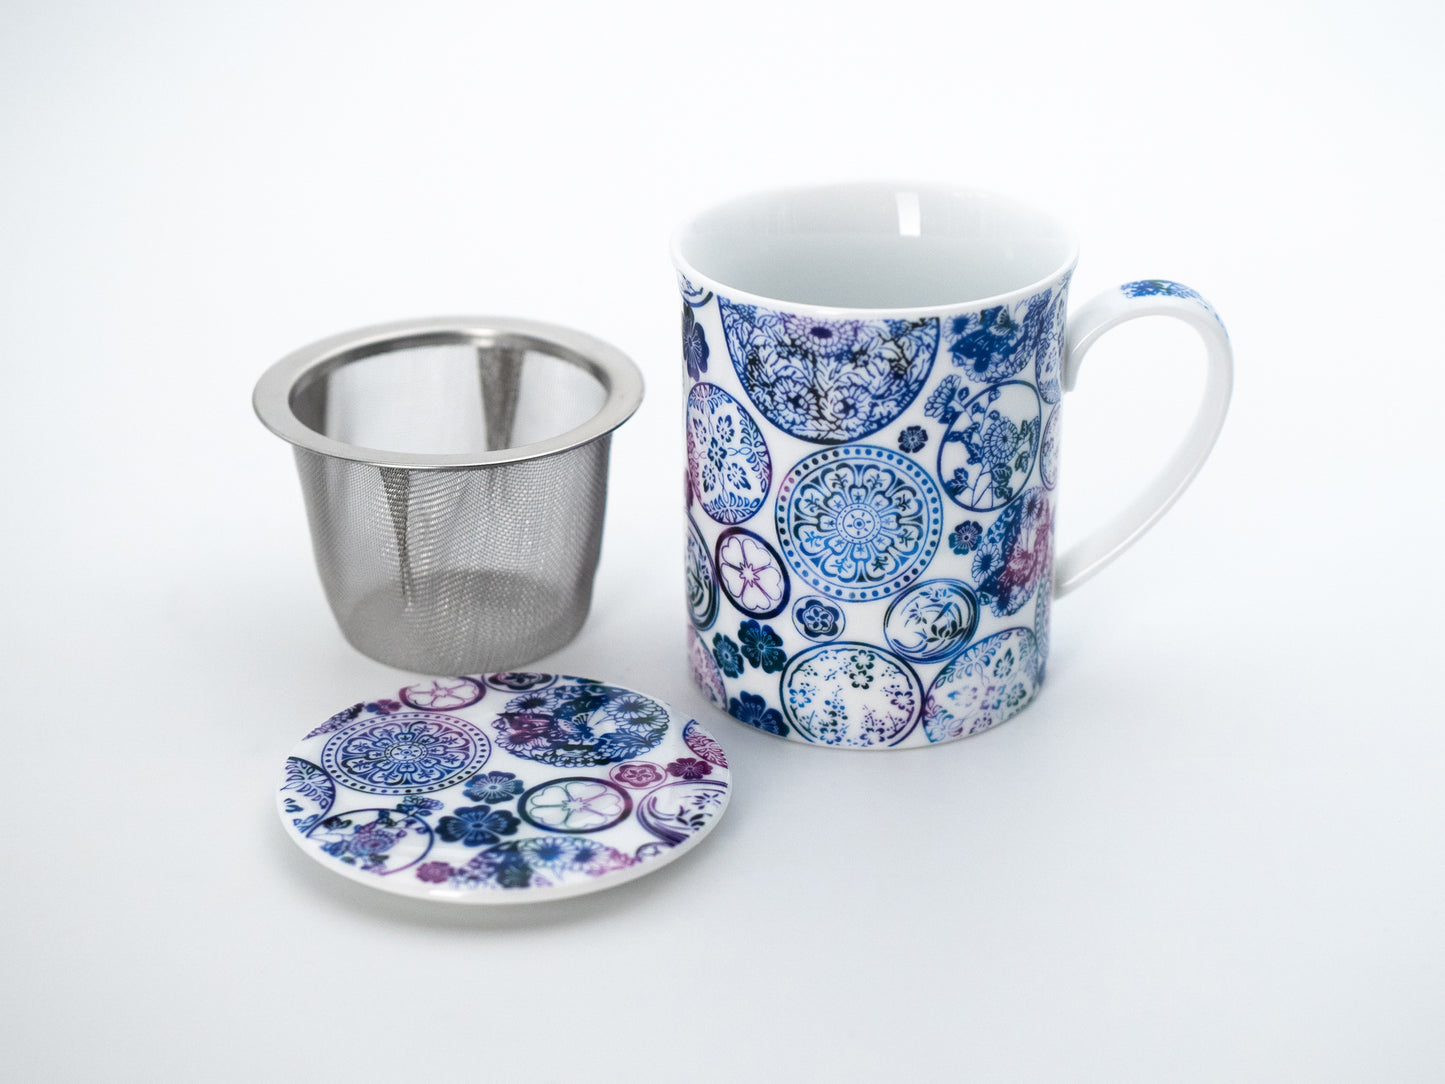 Blue mandala porcelain infuser mug and lid with stainless steel infuser basket